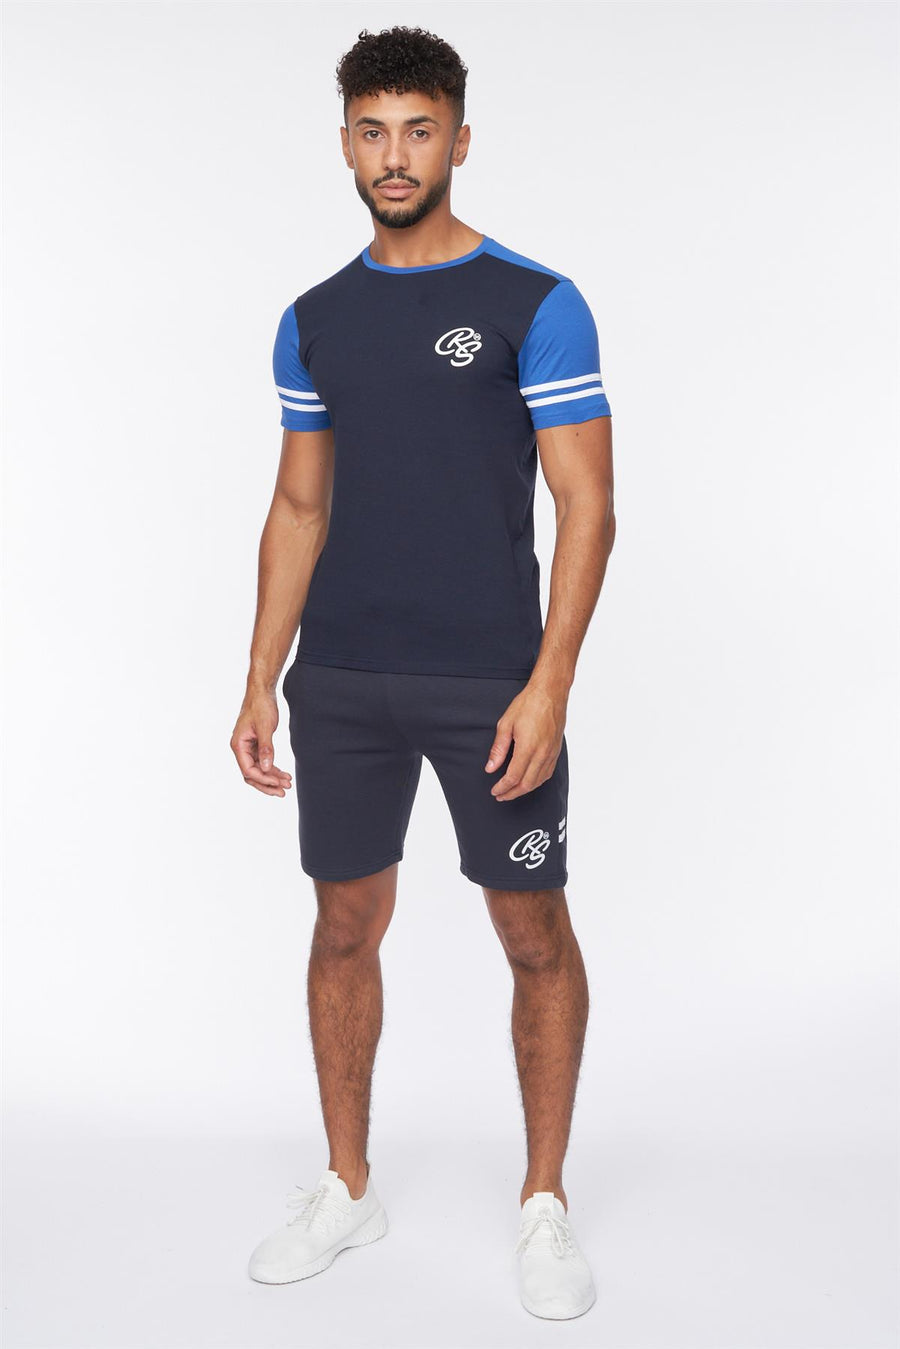 Techland T-Shirt/Shorts Set Navy/Blue